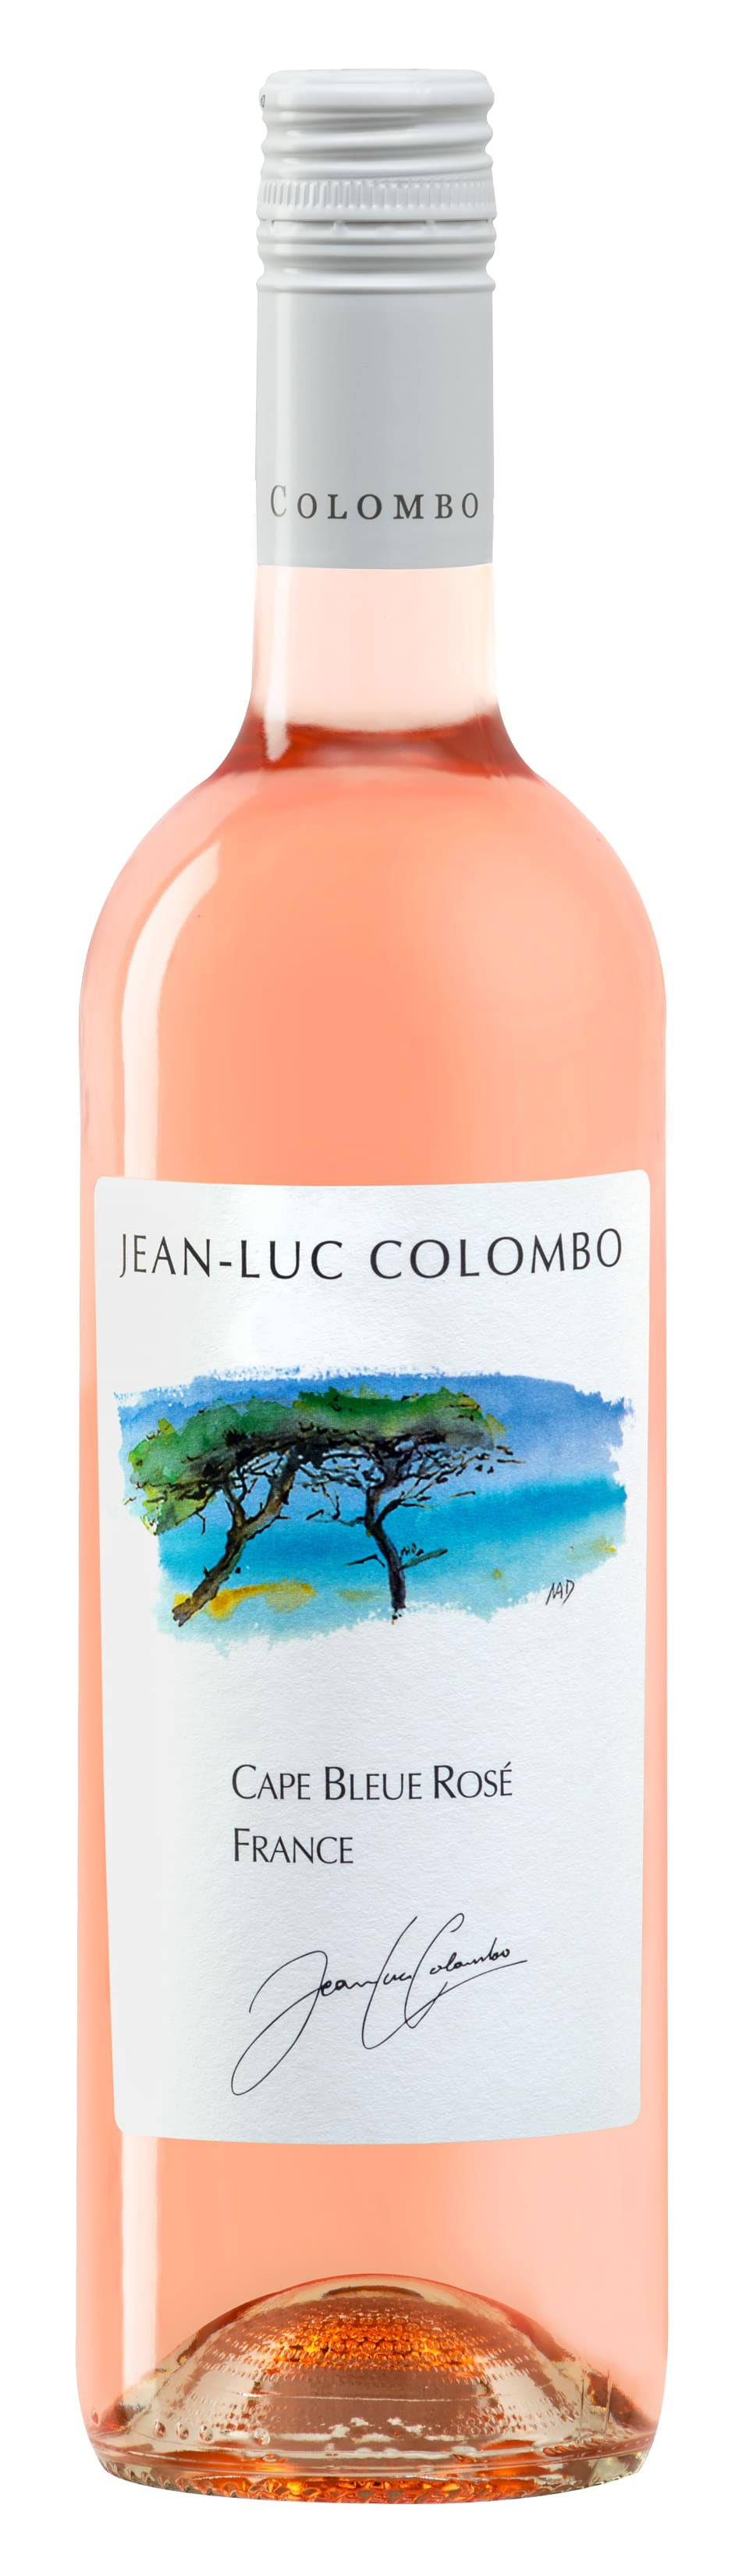 Jean-Luc Colombo Cape Bleue Rose, France - 750 ml